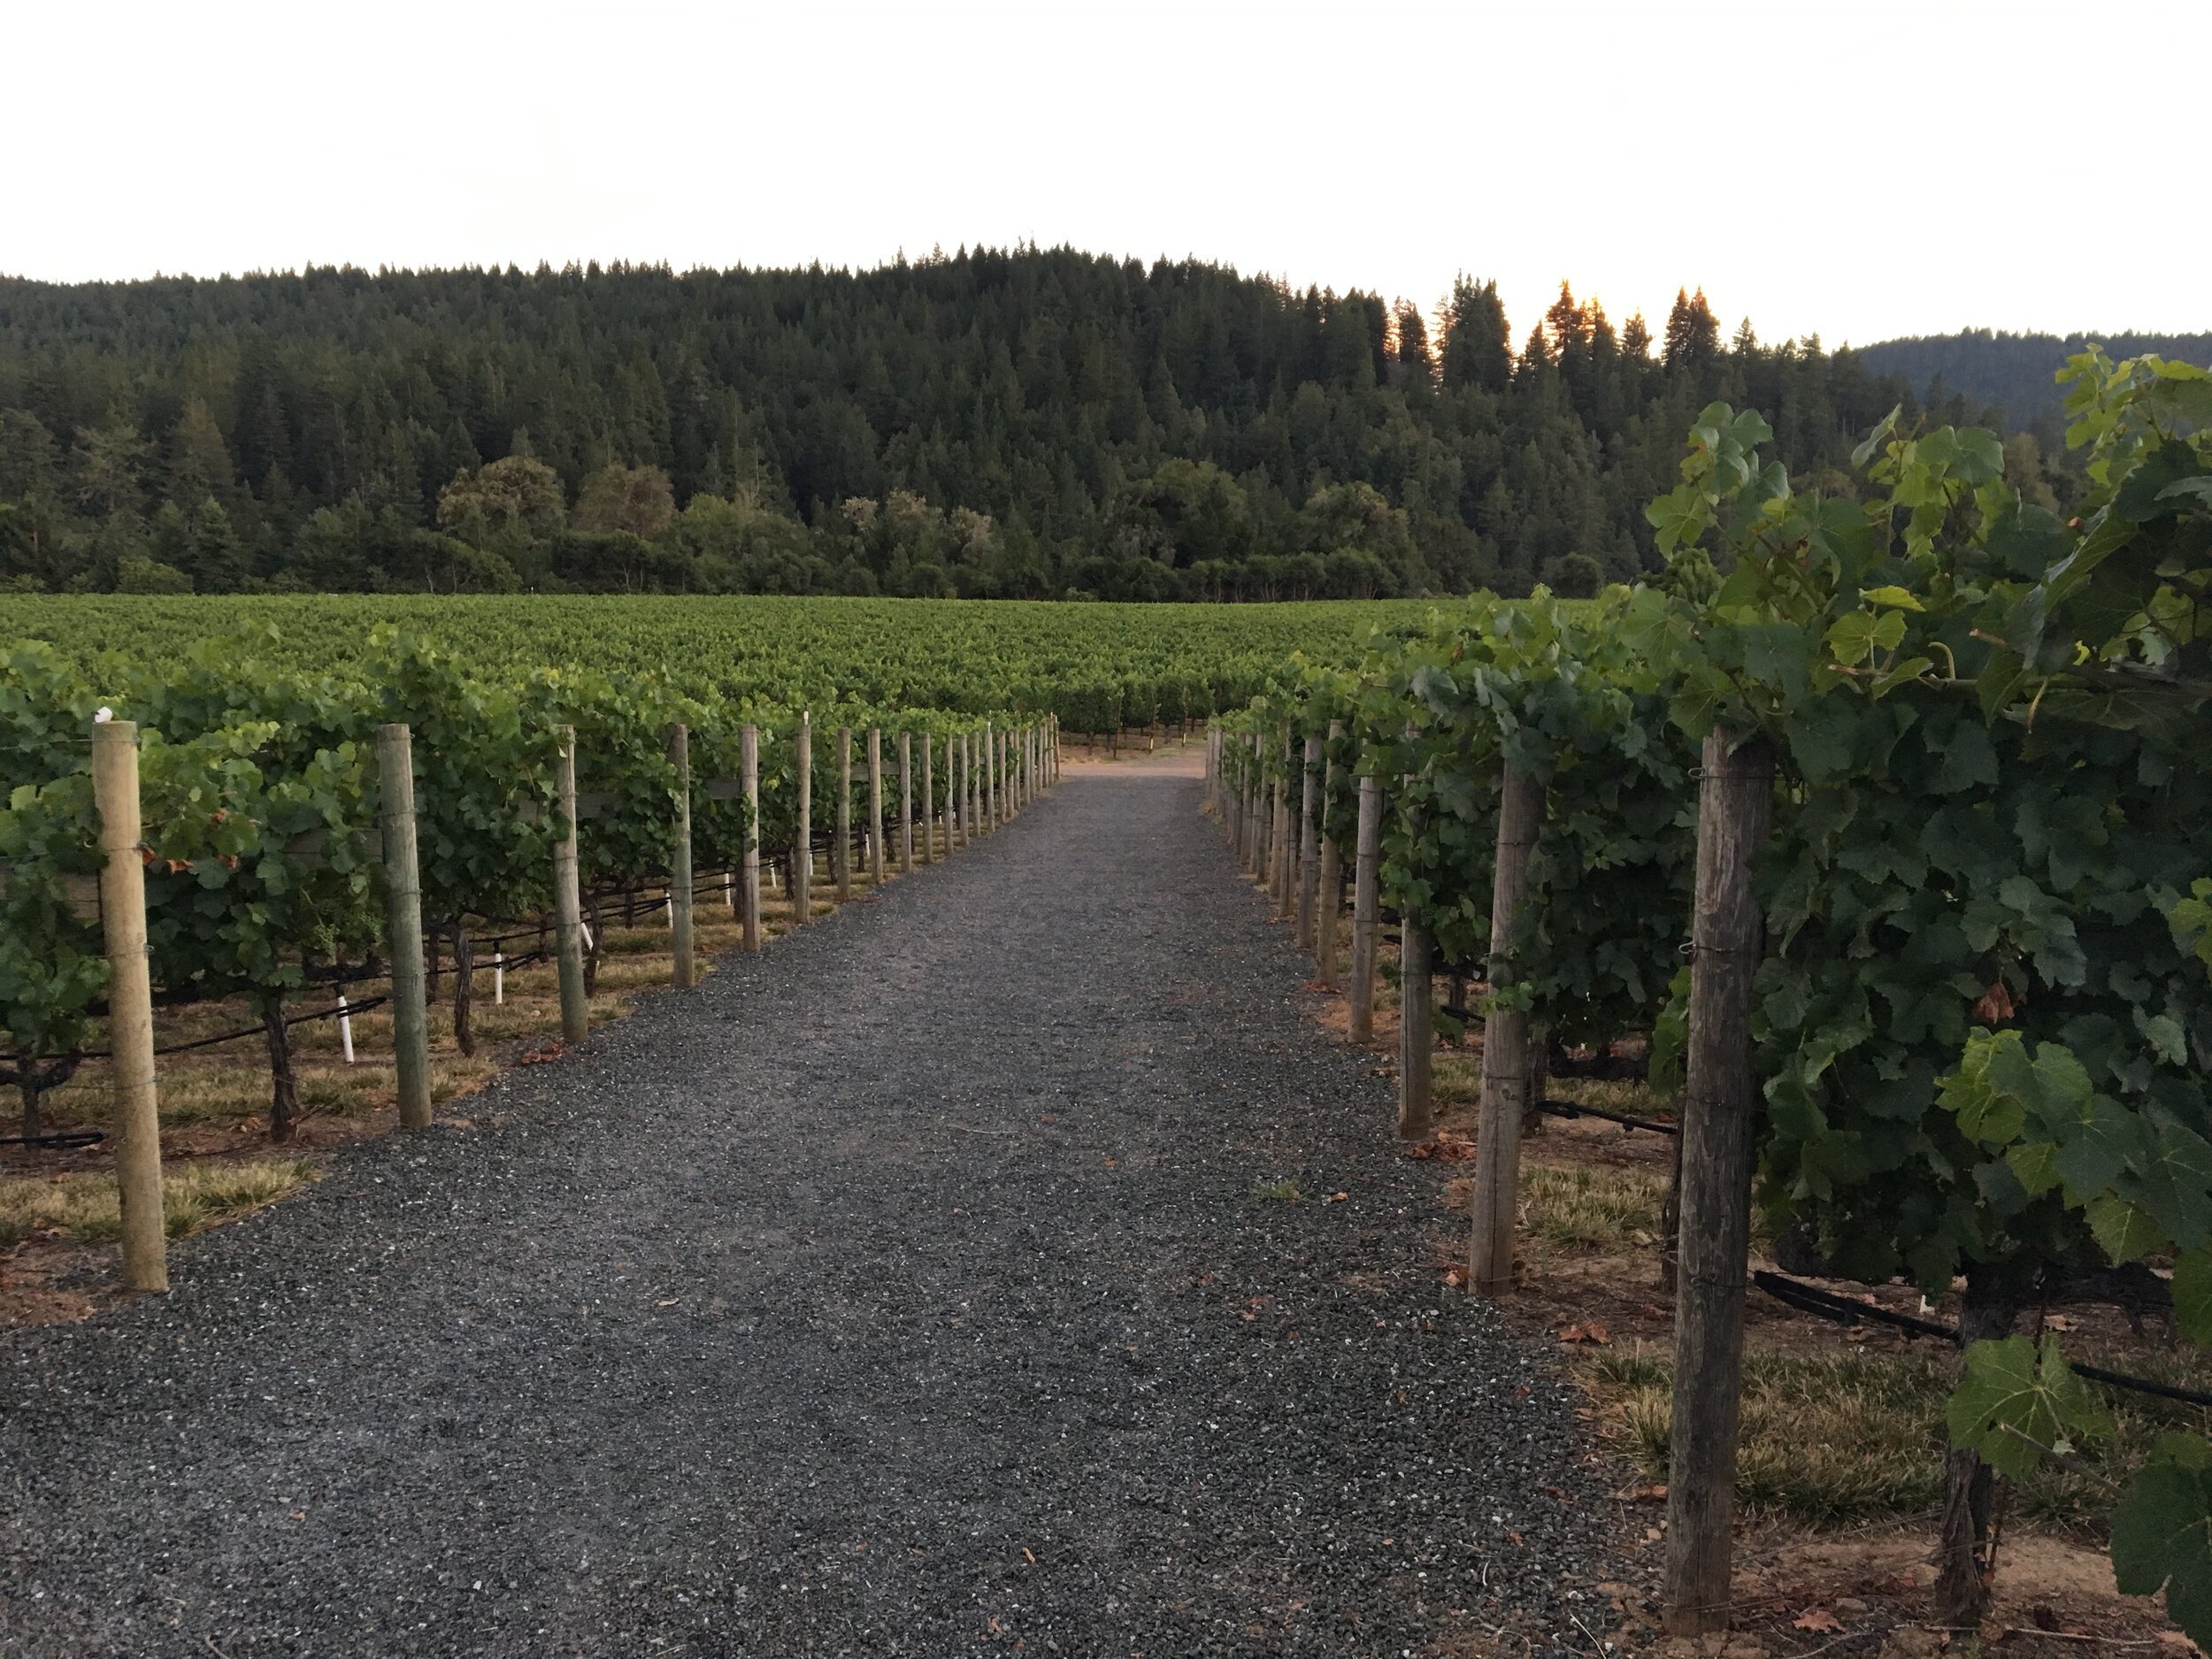 Road leading into vineyard at dusk